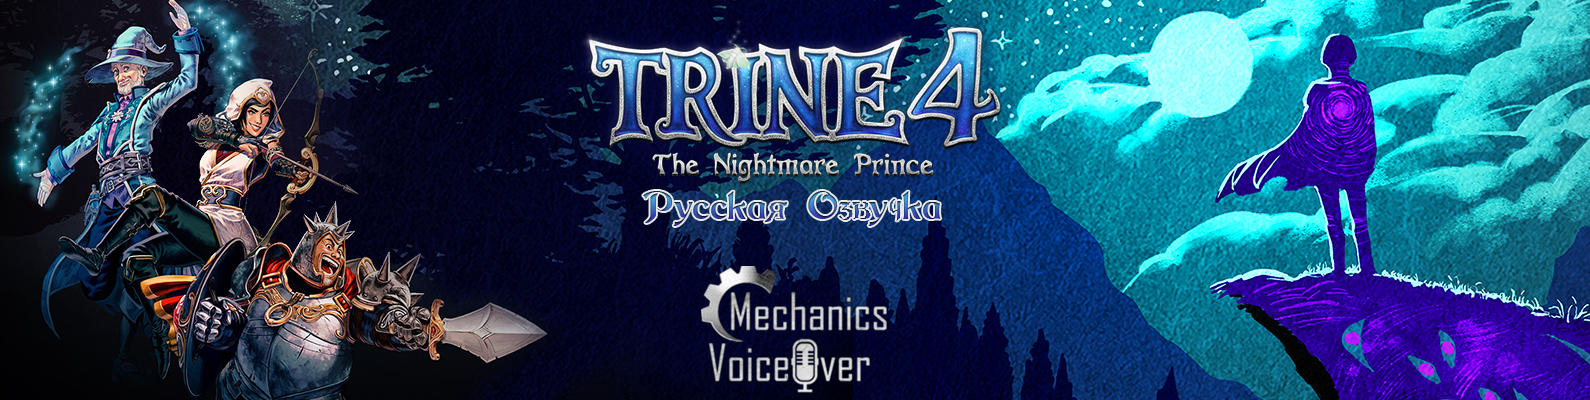 Mechanic voice. Trine 4 Amadeus. Trine 4: the Nightmare Prince название эпизодов. Trine 3 русификатор звук. Trine 4 - the Nightmare Prince рыцарь.